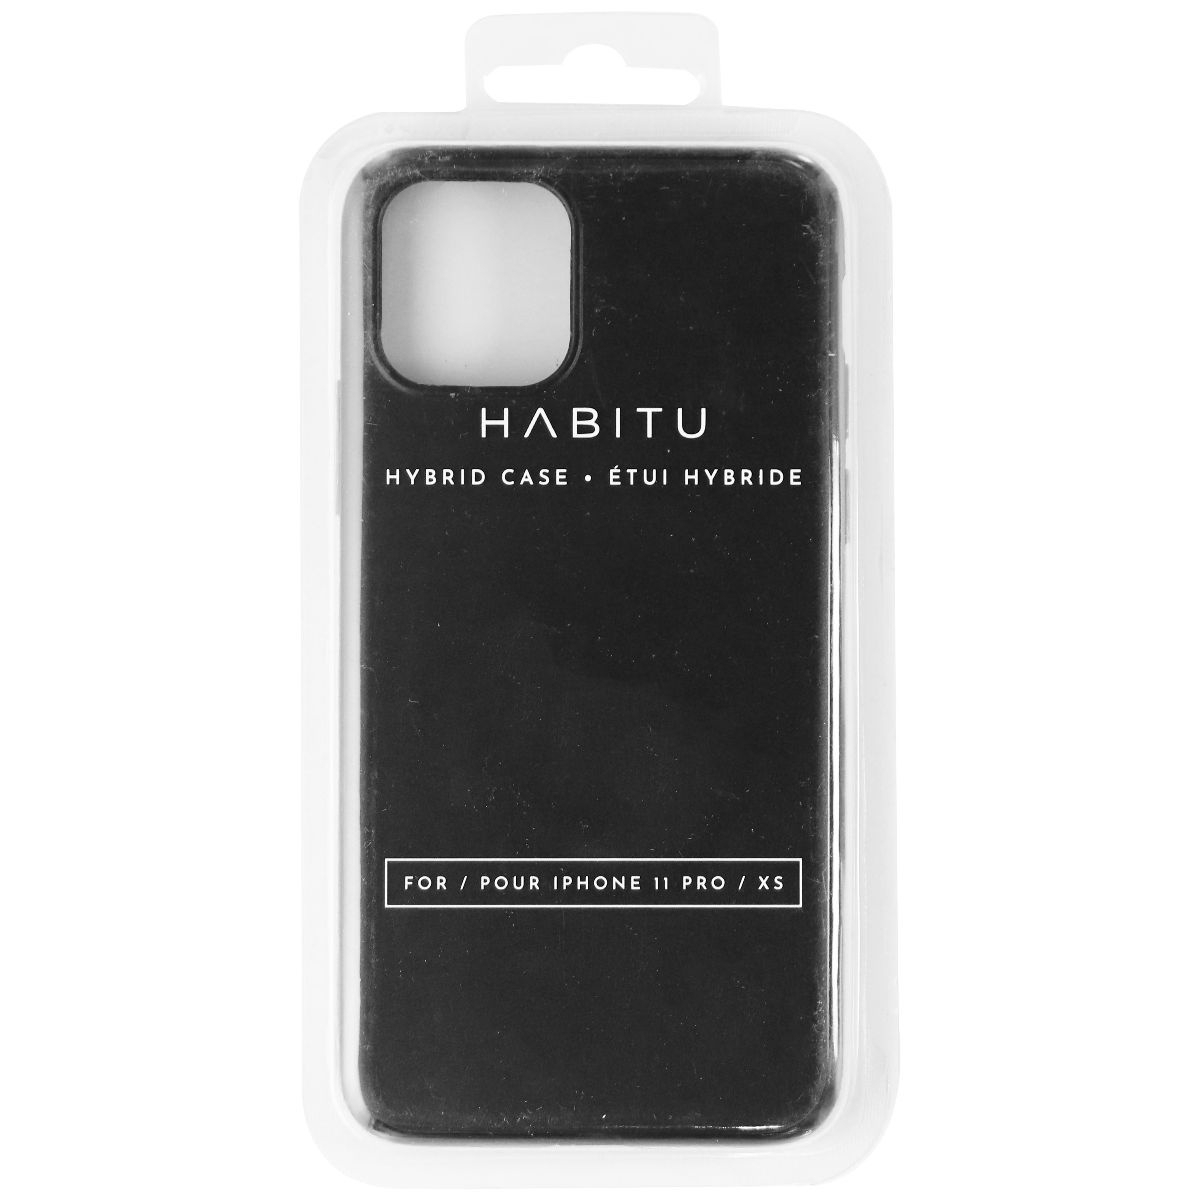 Habitu Hybrid Slim Protective Case For IPhone 11 Pro / XS - Black